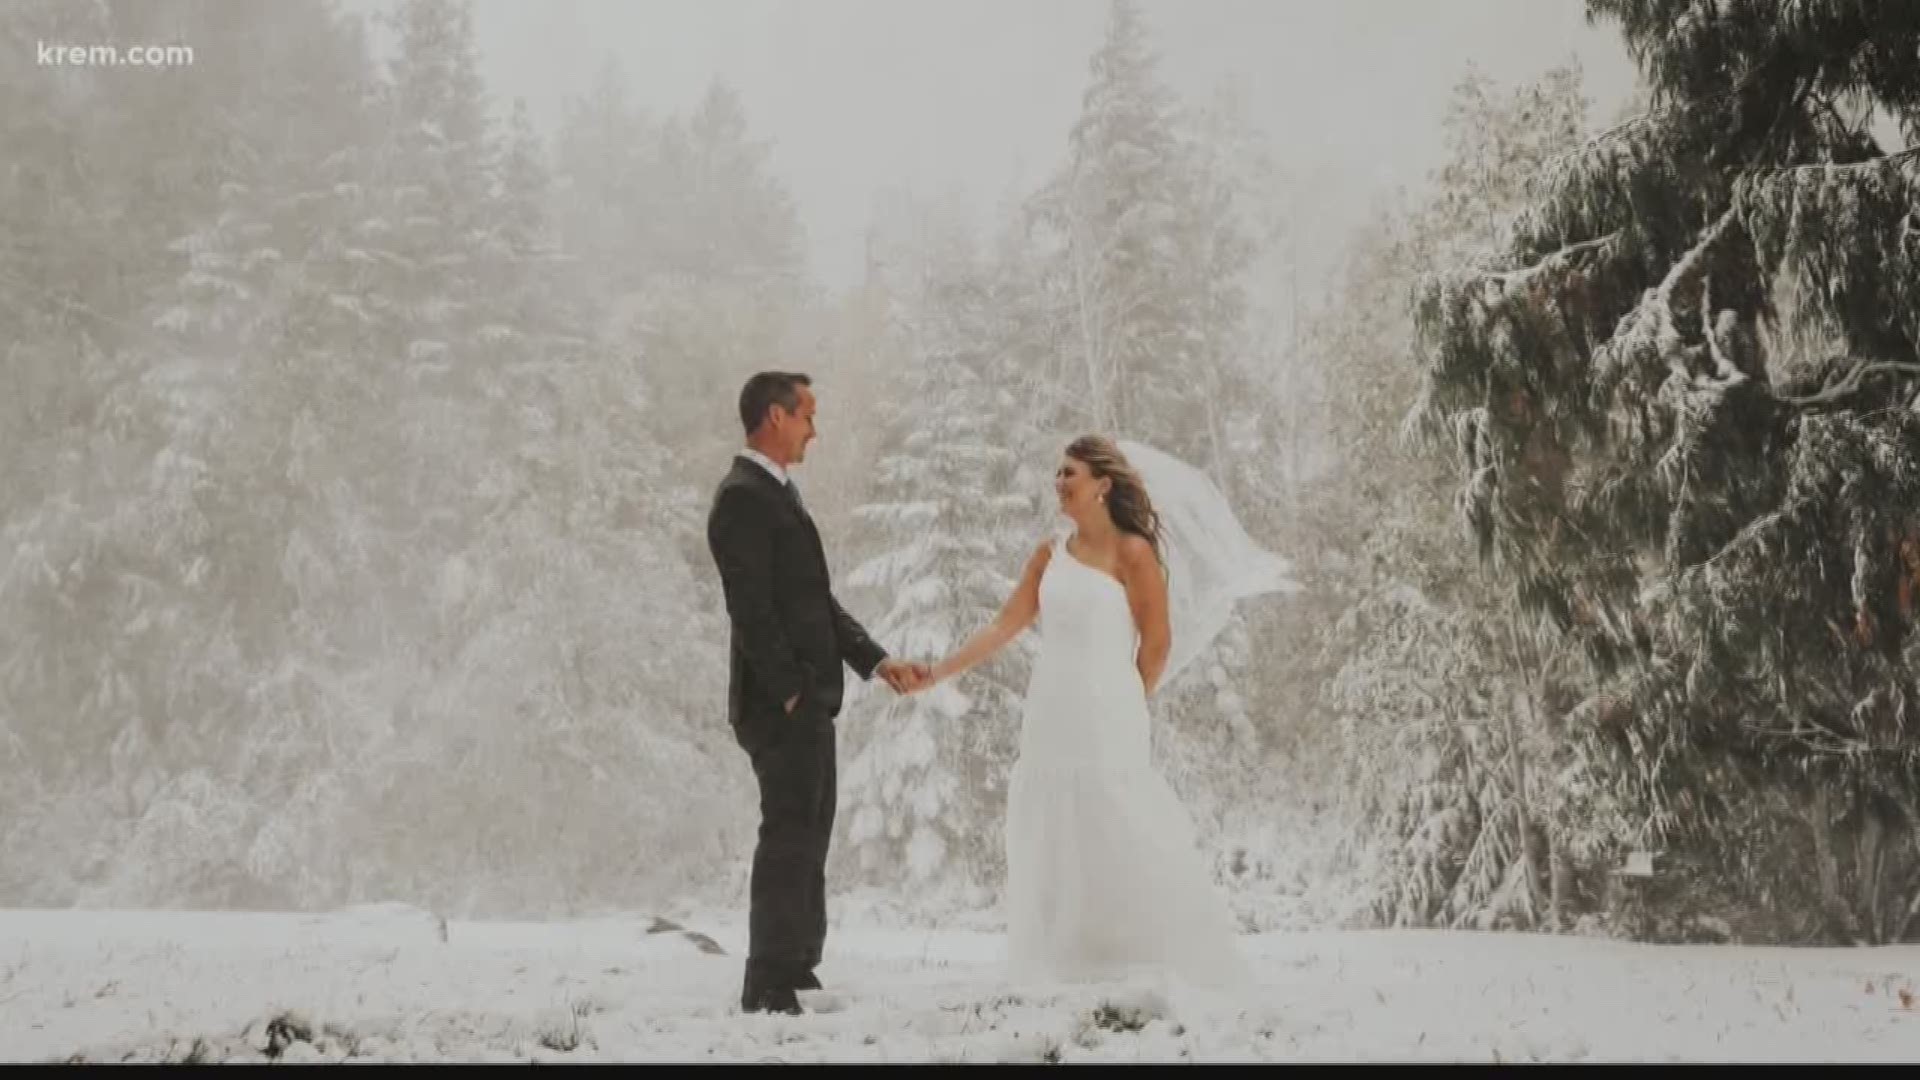 Northwest snowstorm makes beautiful wedding backdrops | www.waterandnature.org